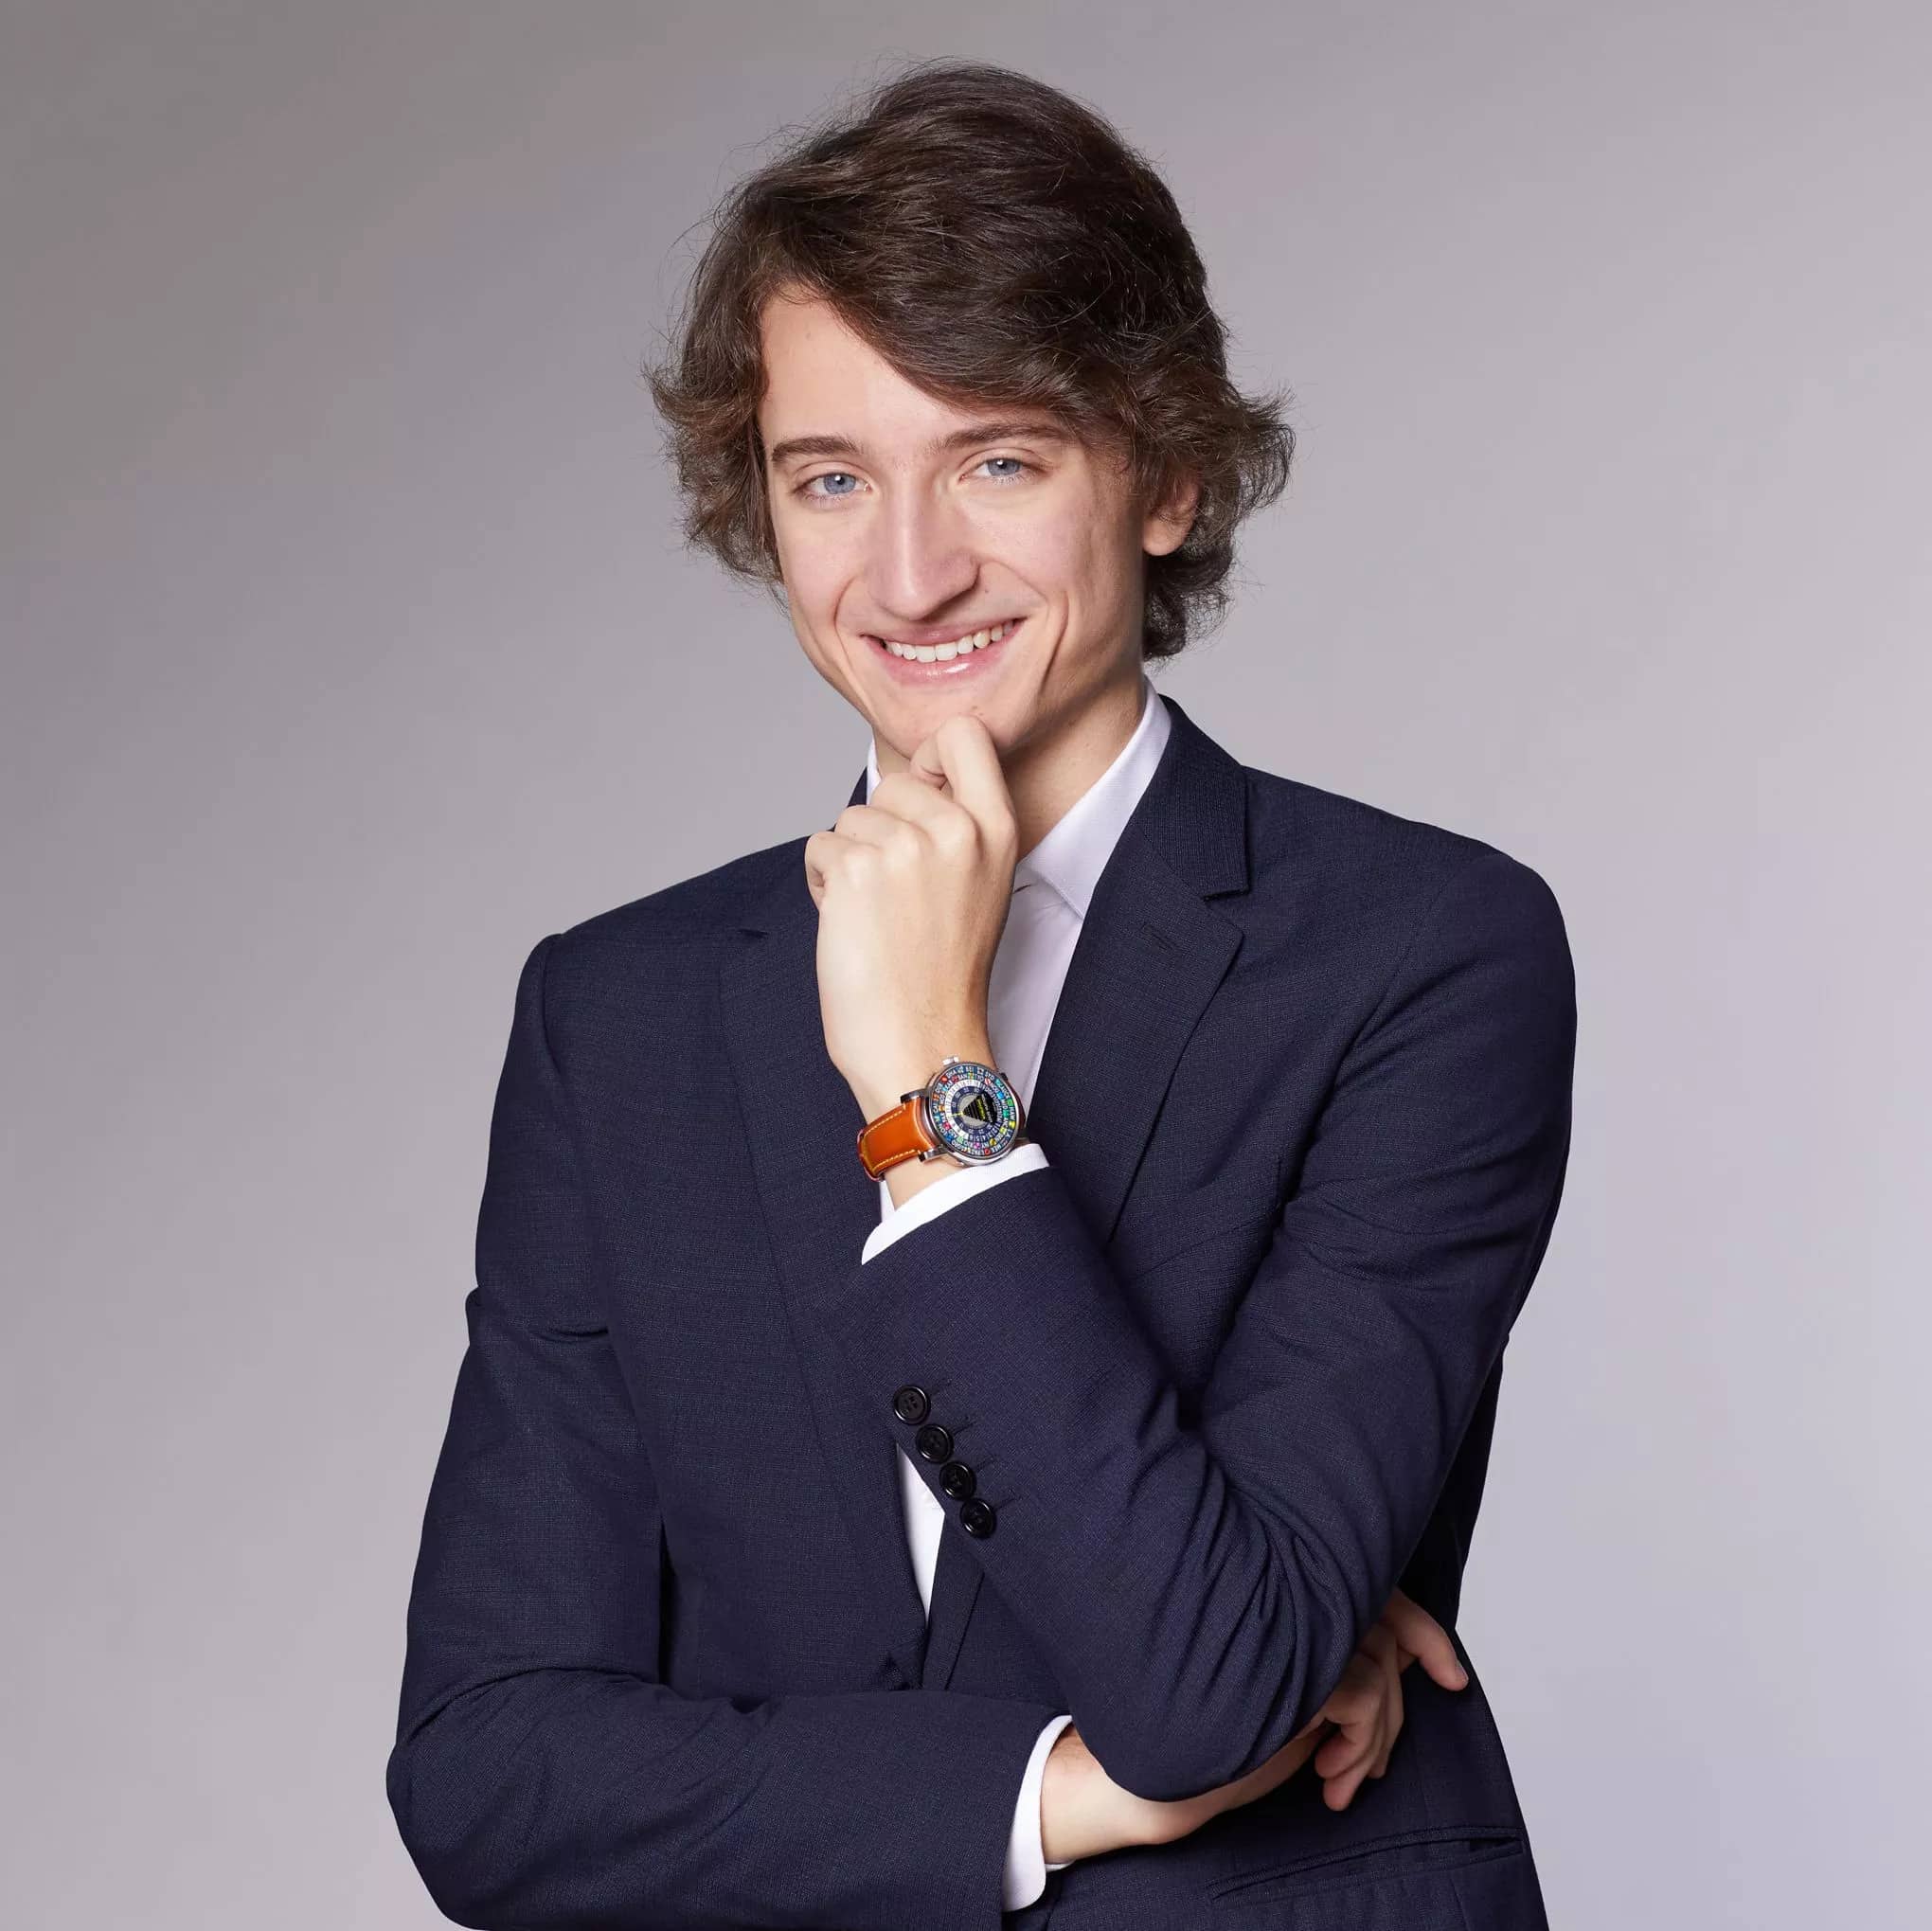 Louis Vuitton CEO Bernard Arnault Interviews His 5 Children To Decide  Successor For Luxury Brand